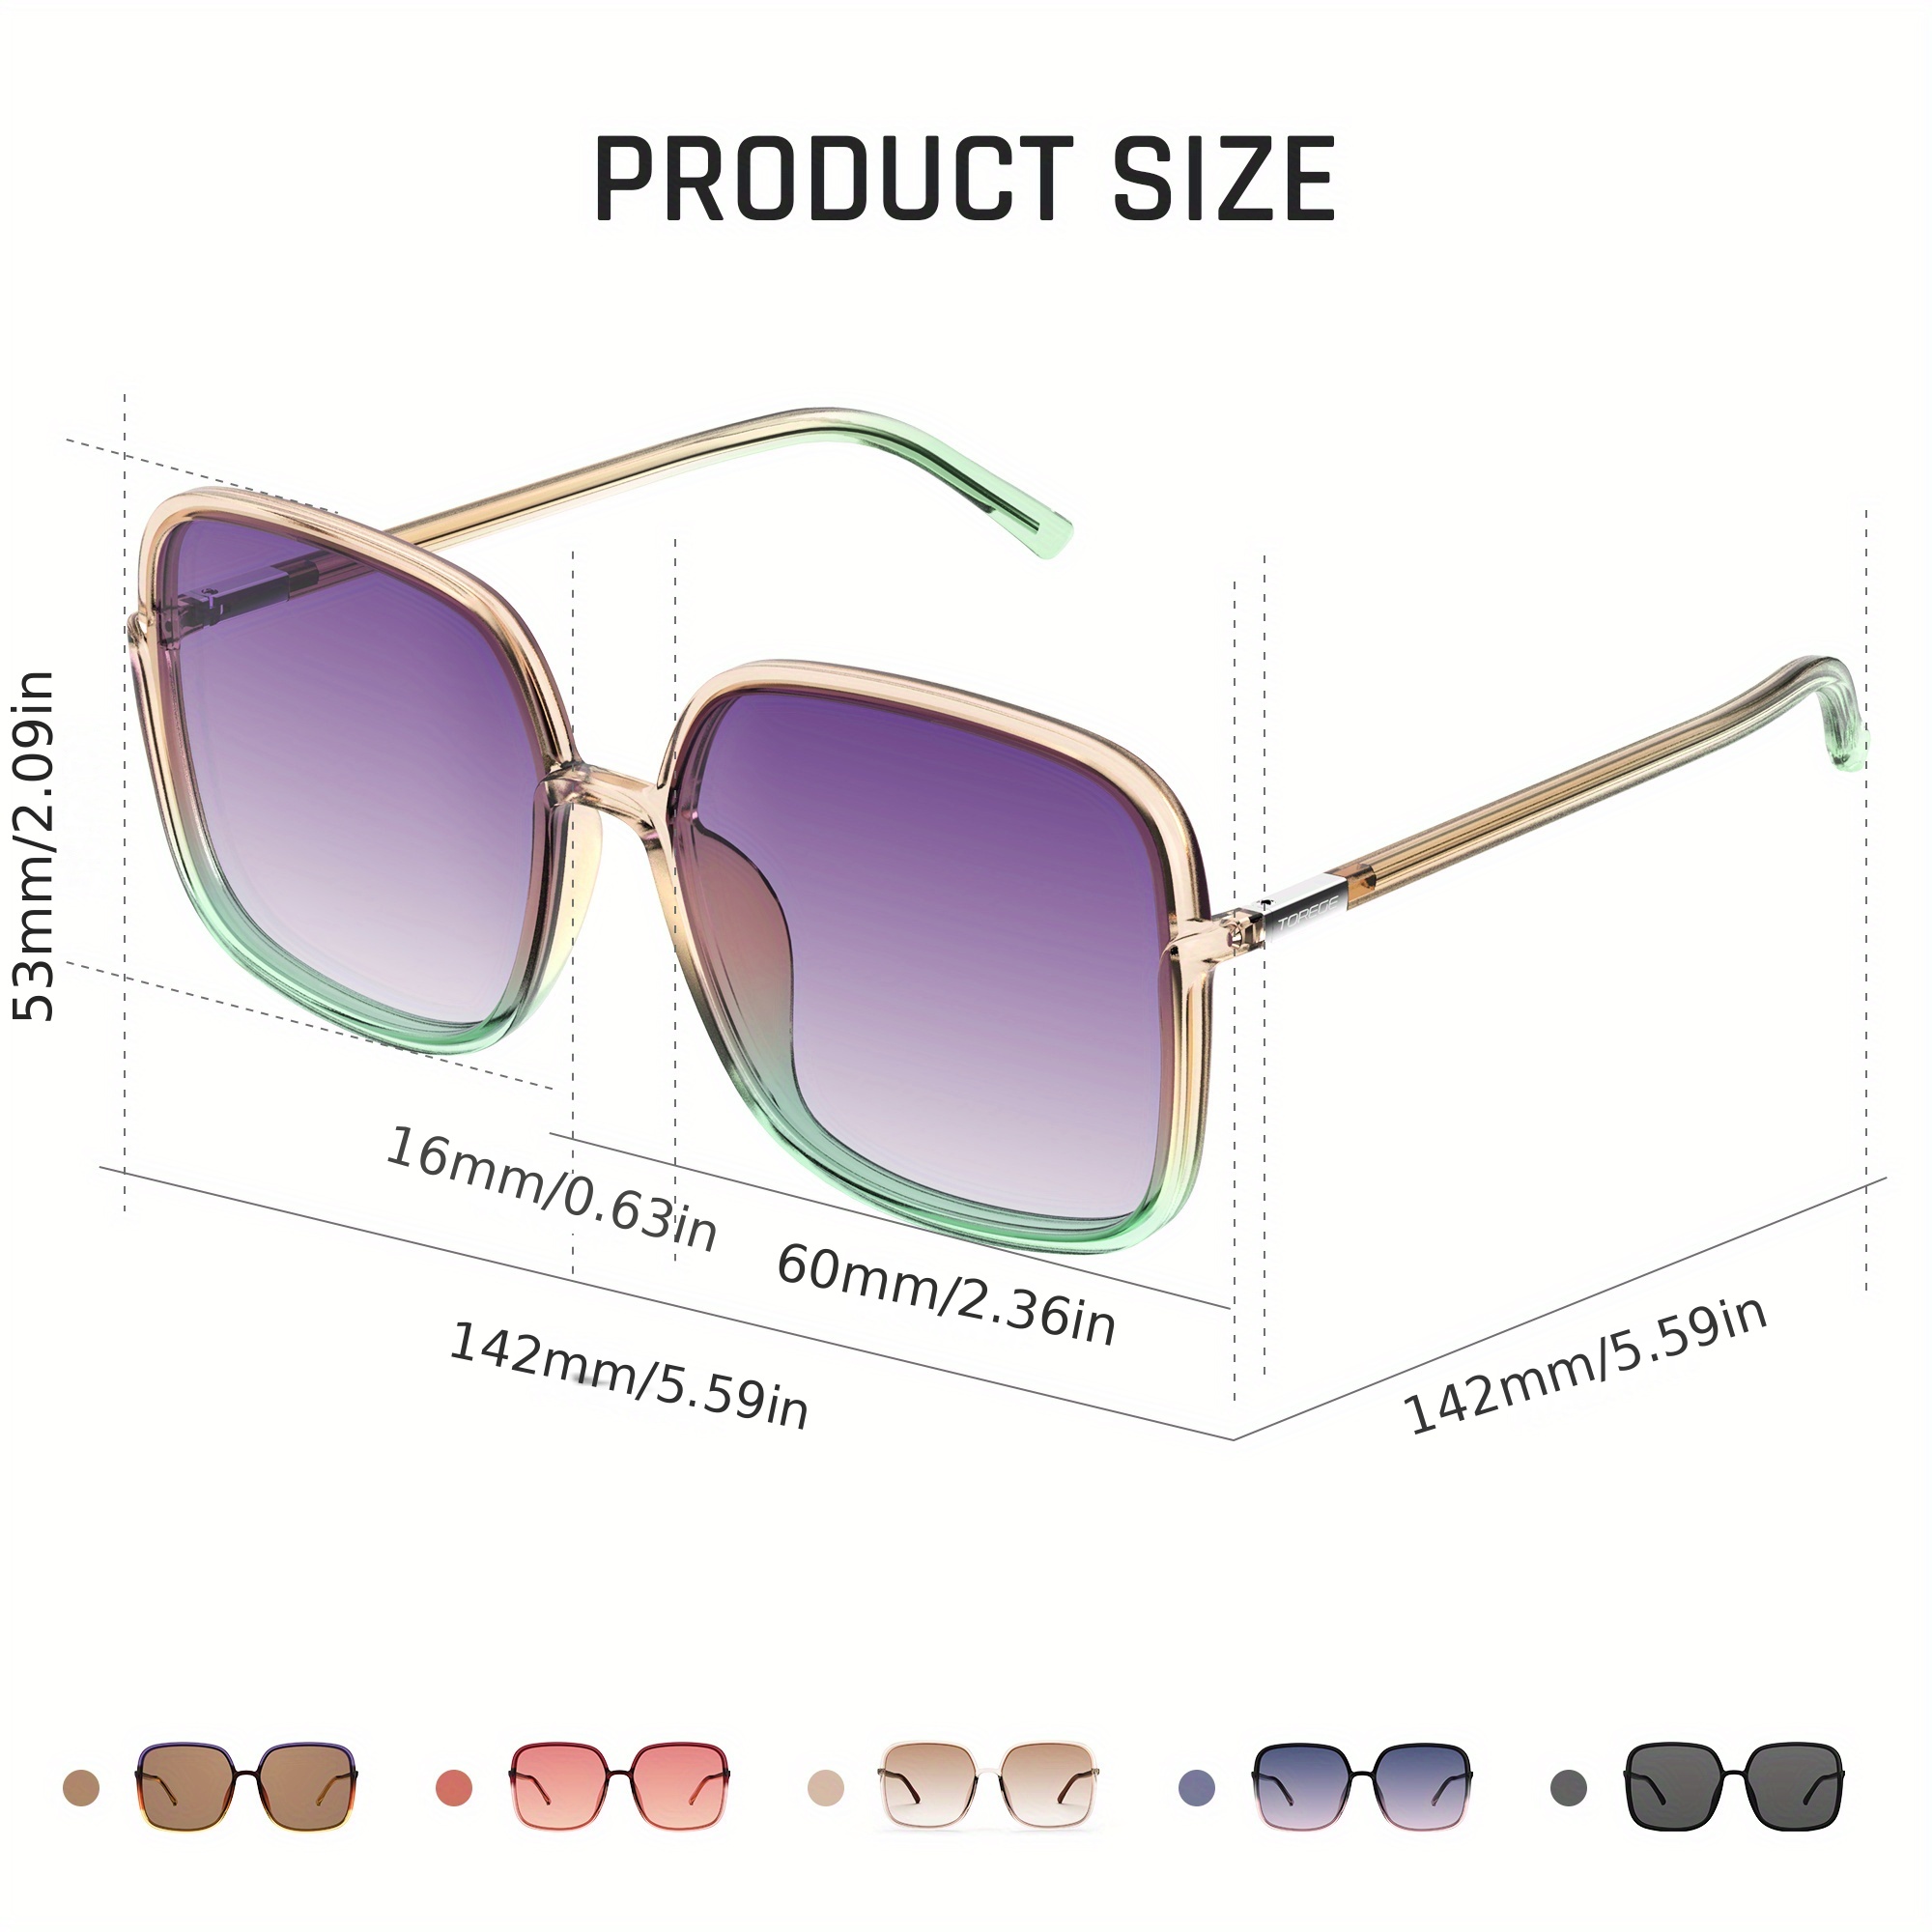 * For Women Transparent Brown-Green Gradient Frame Purple Lens